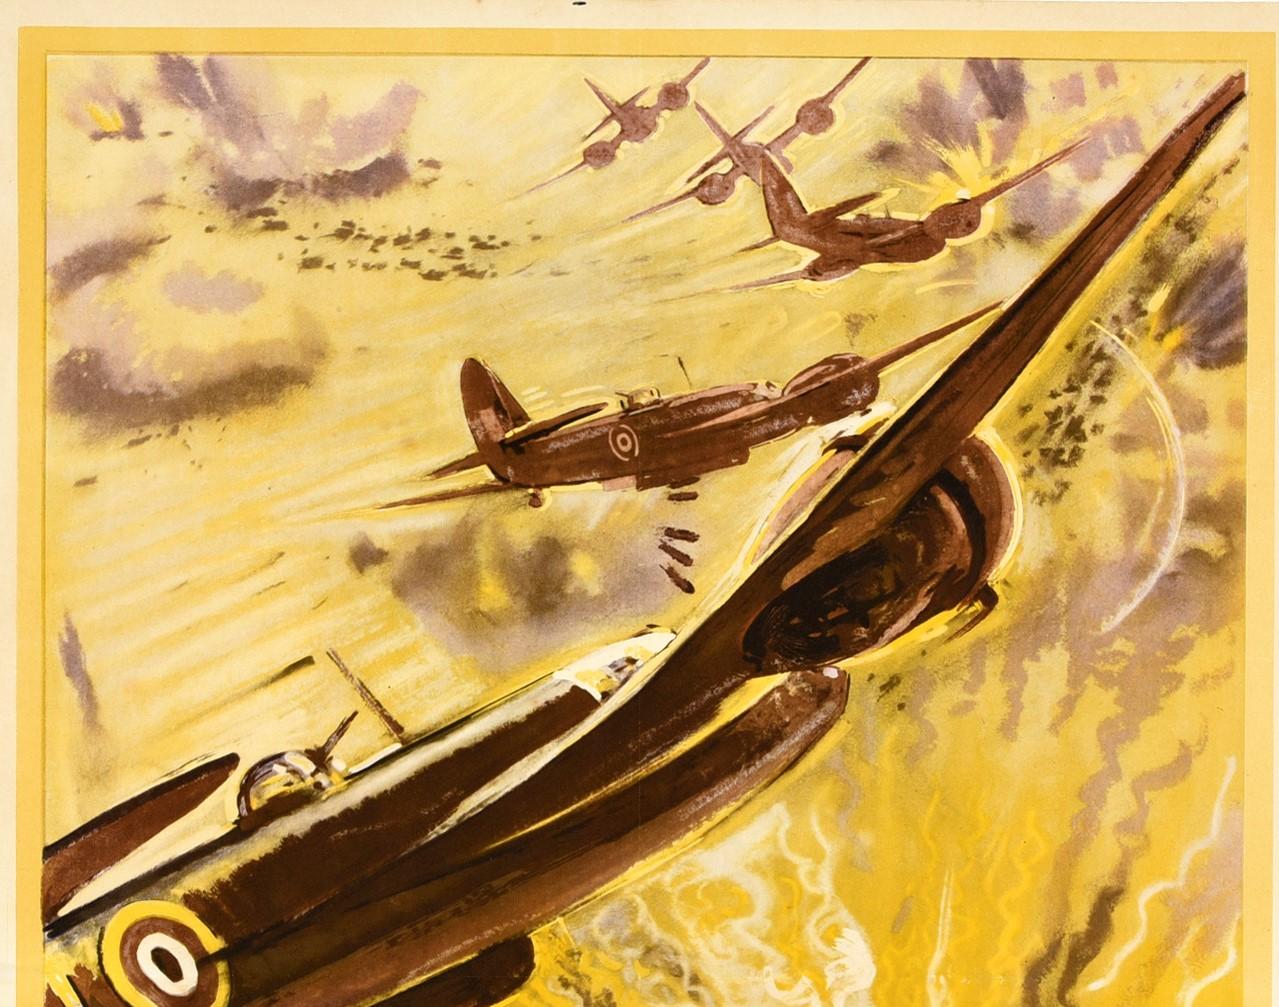 Original vintage World War Two propaganda poster in Portuguese - A Gra Bretanha Defensora de Liberdade Avios Britanicos 